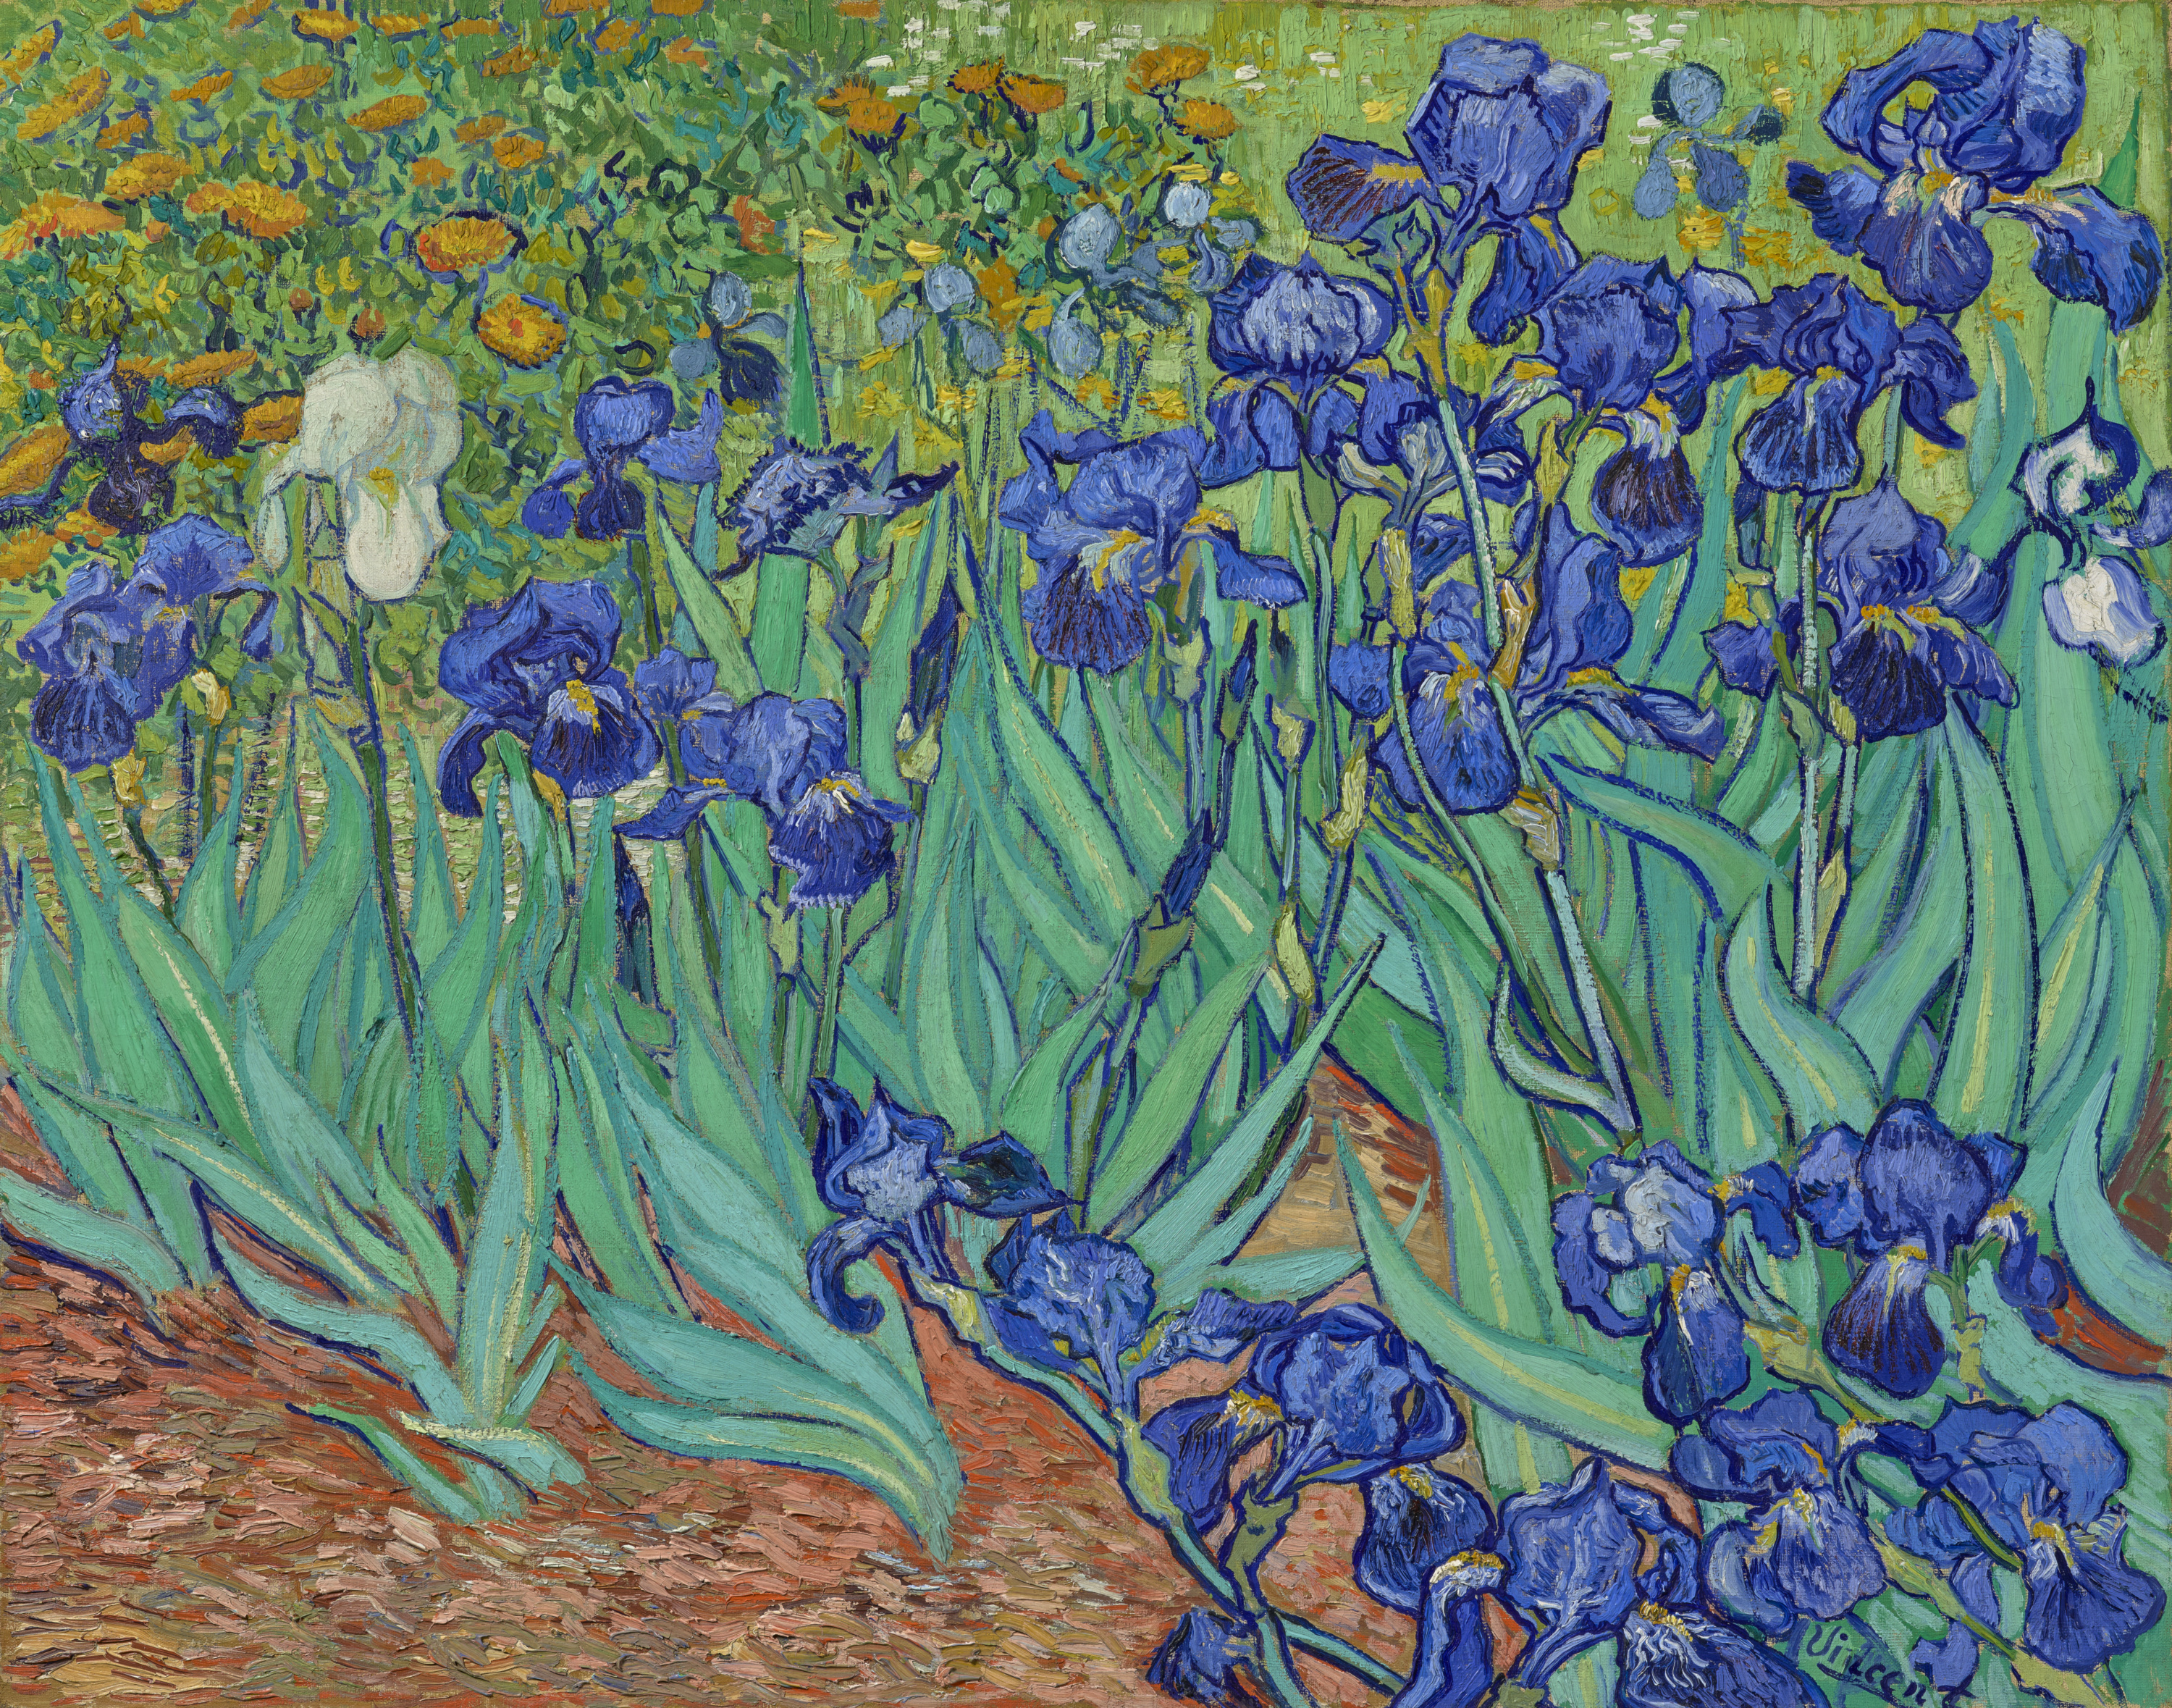 鳶尾花 by Vincent van Gogh - 1889 - 74.3 × 94.3 cm 